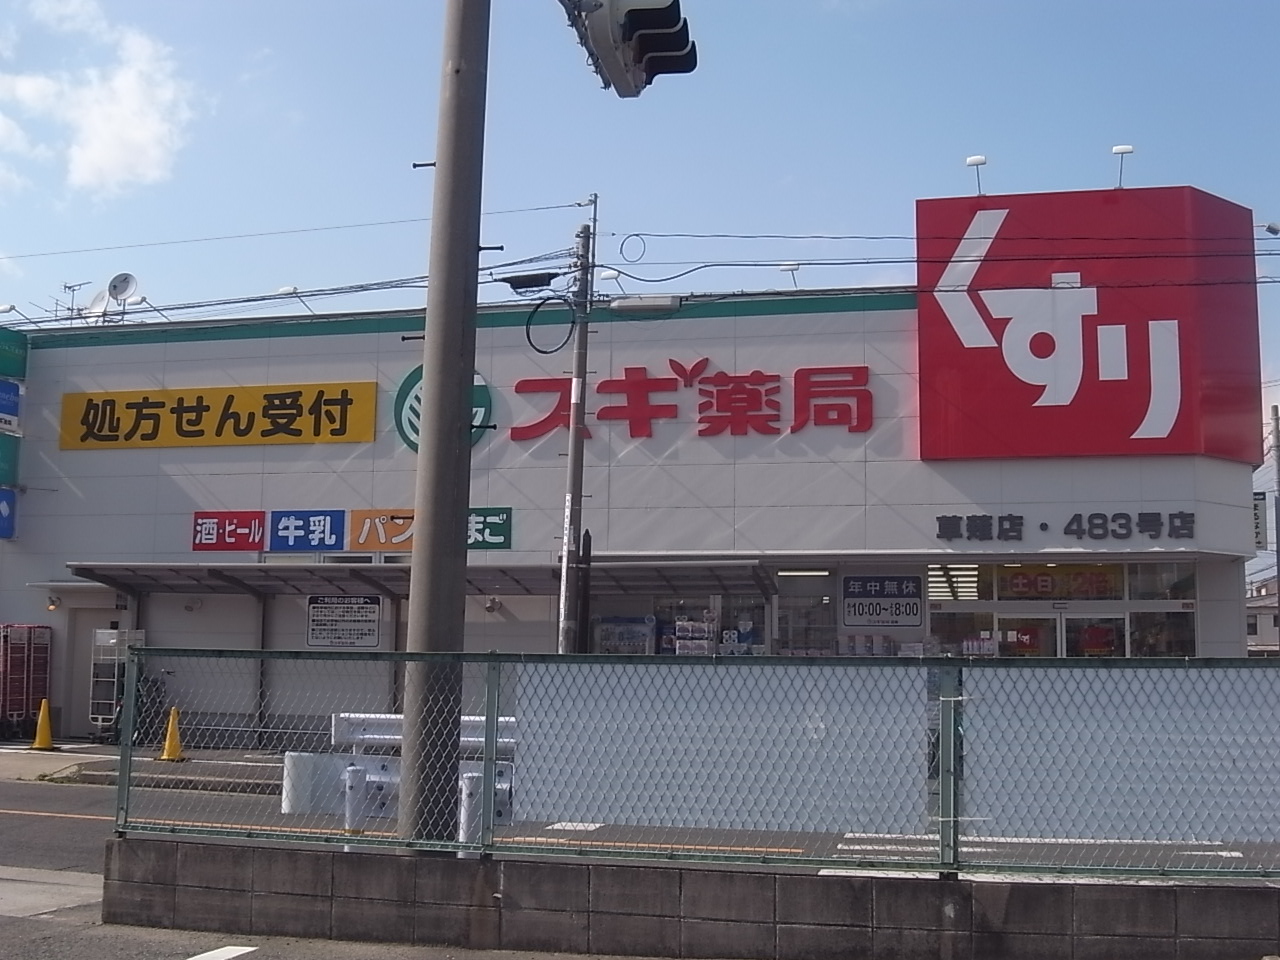 Dorakkusutoa. Cedar pharmacy Kusanagi shop 480m until (drugstore)